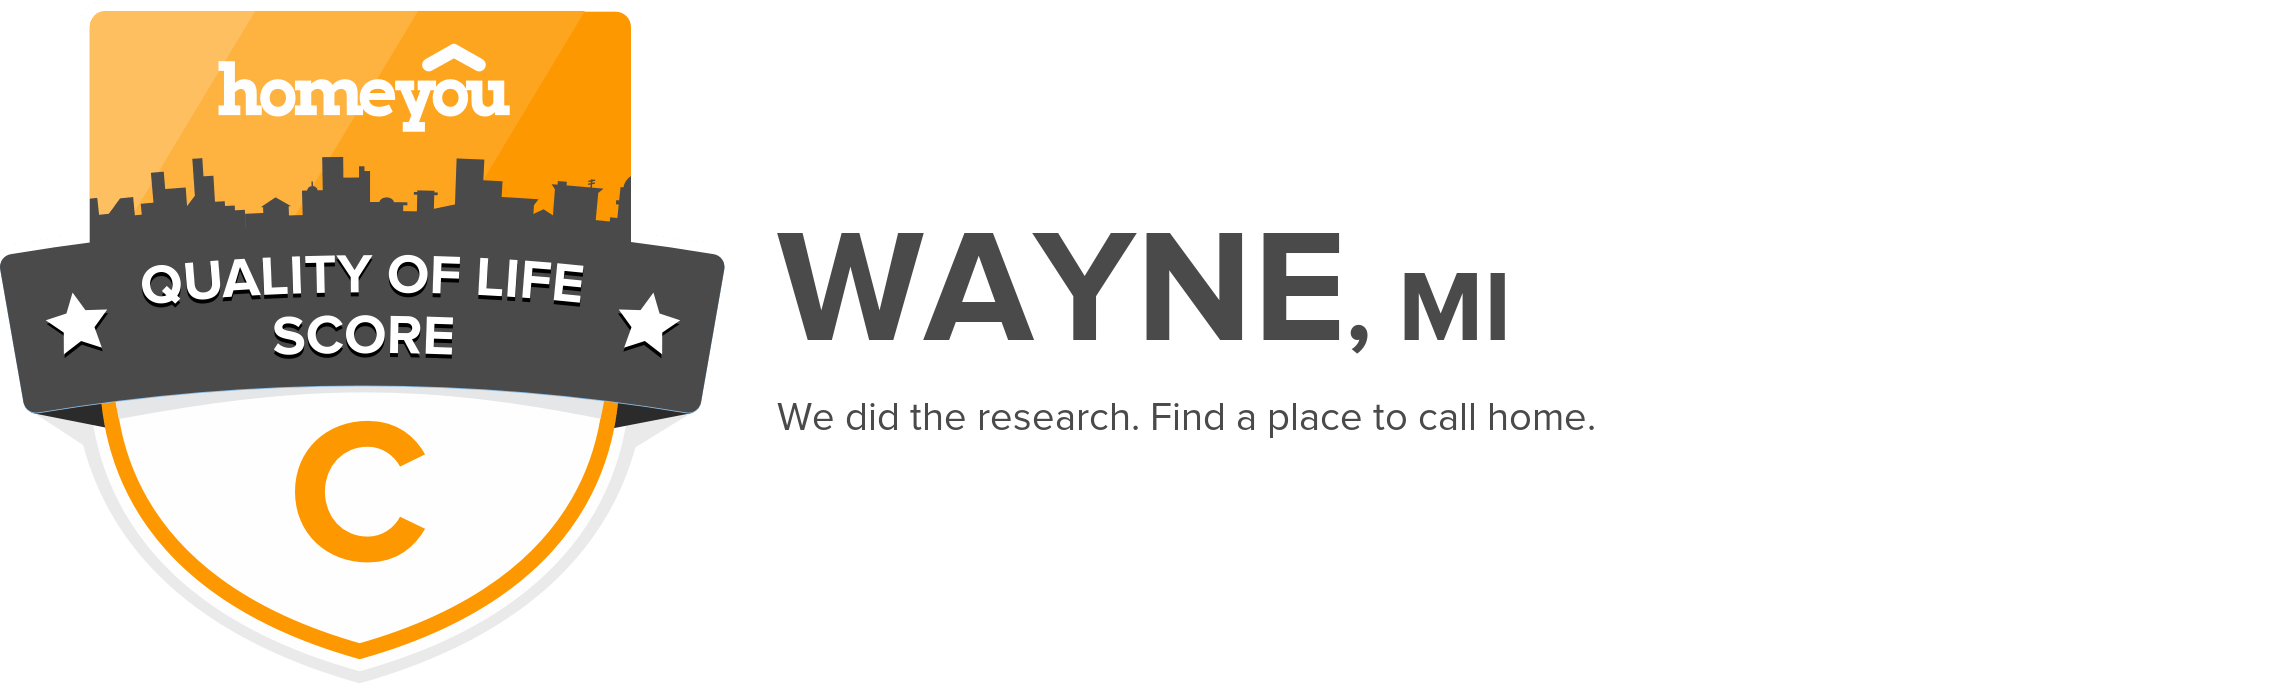 Wayne, MI